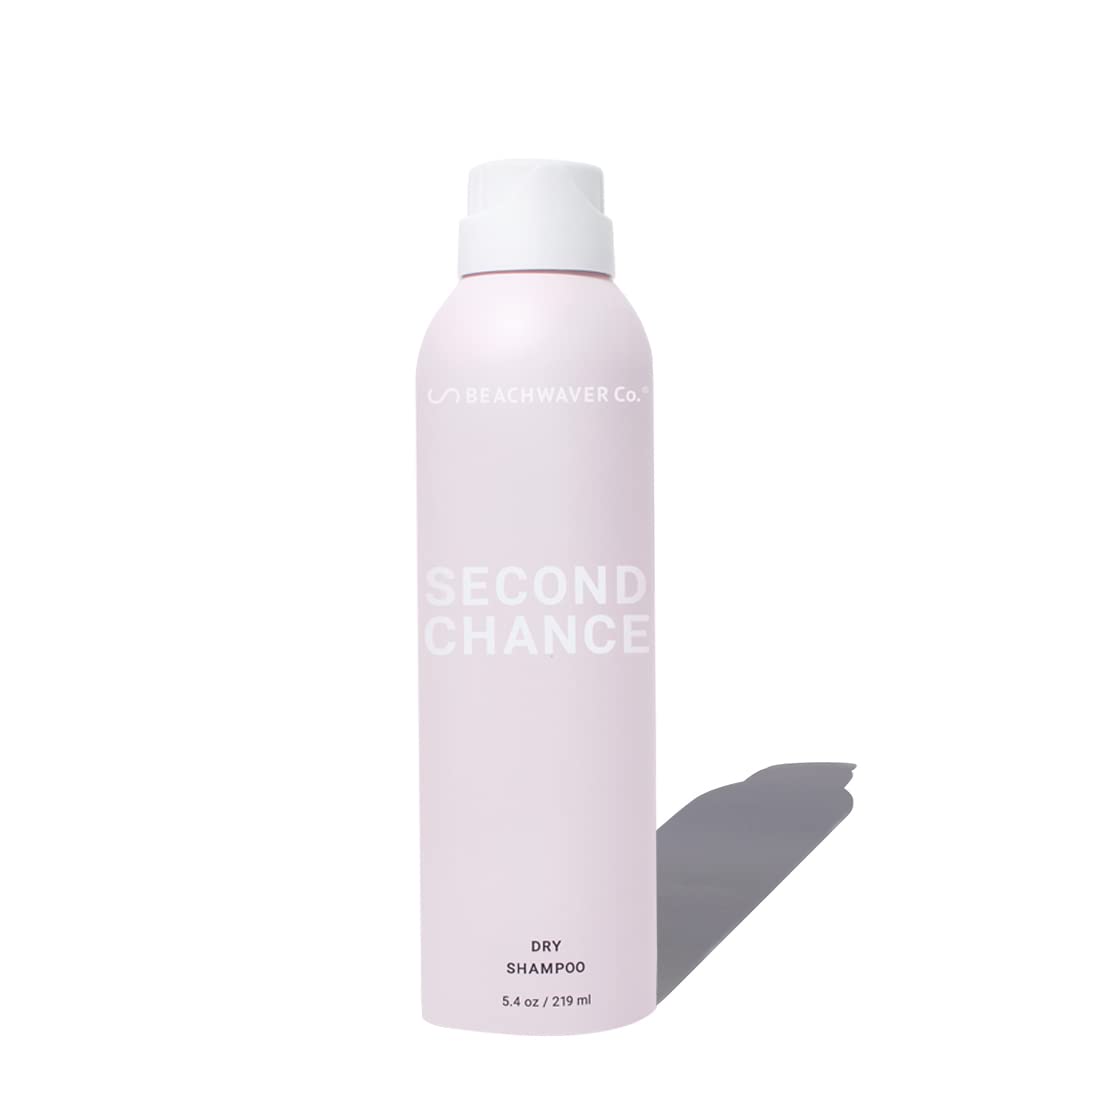 The Beachwaver Co. Second Chance Dry Shampoo, 5.4 fl. oz. $10